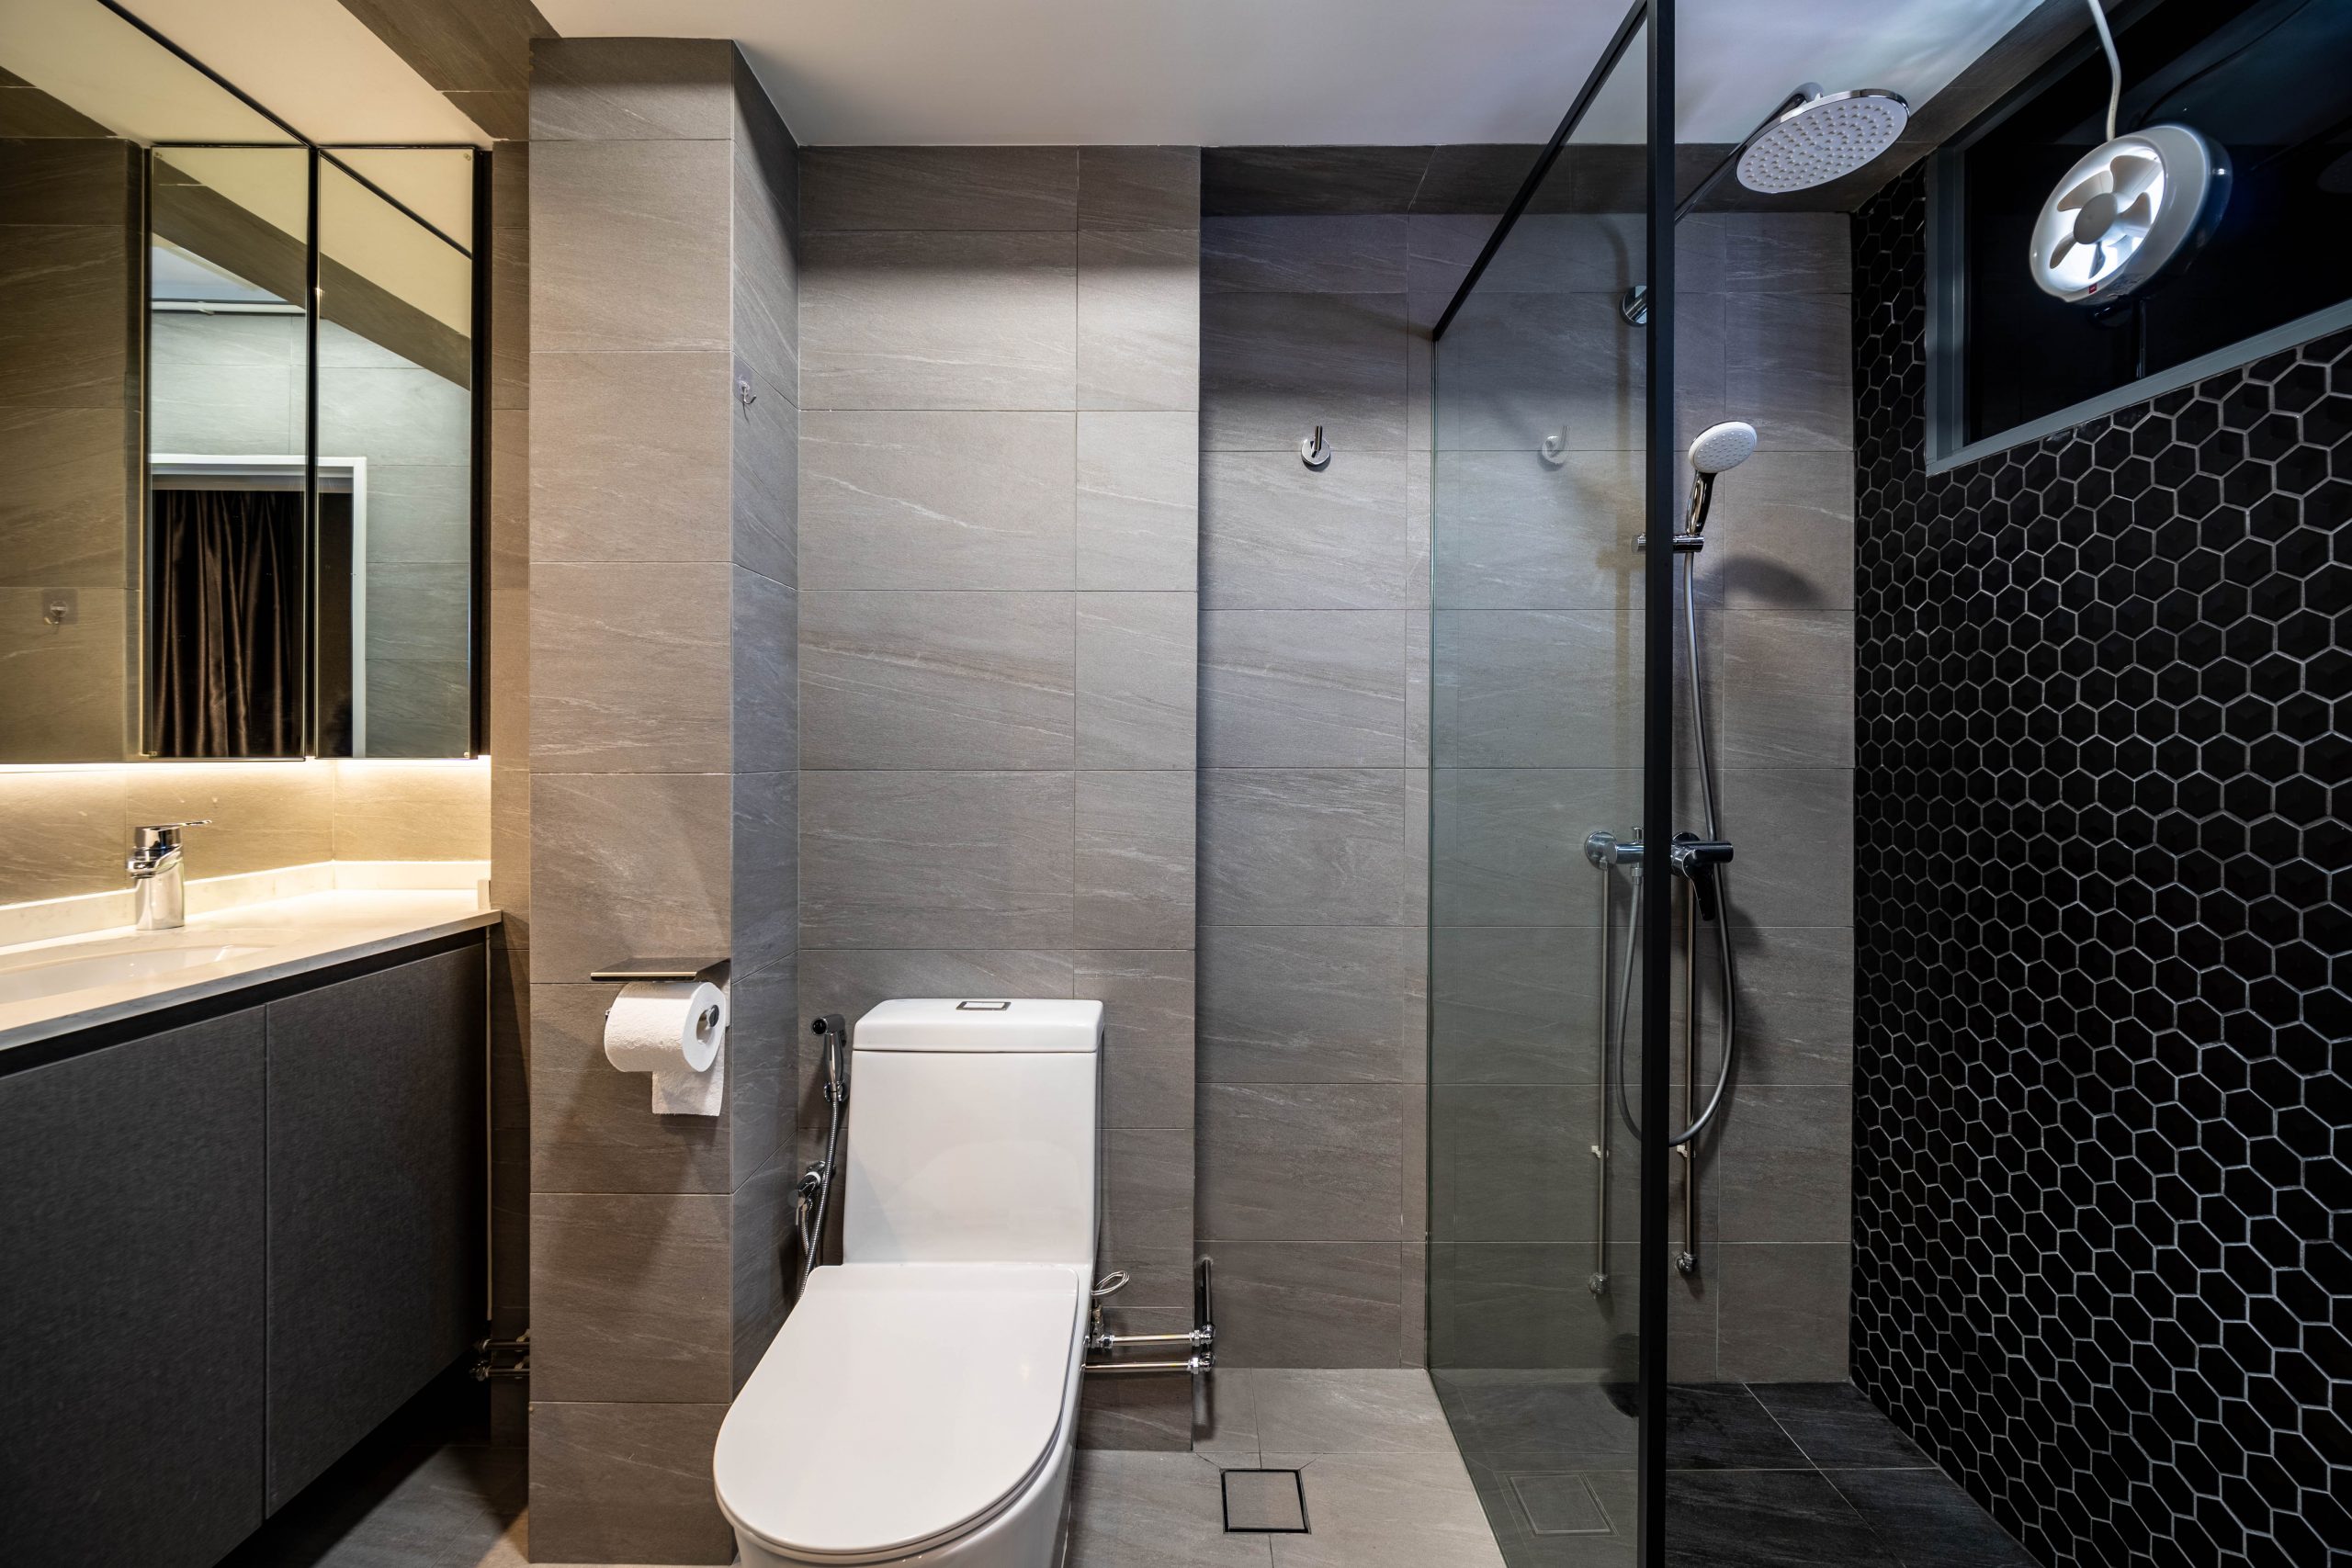 HDB Bathroom Renovation Cost in Singapore